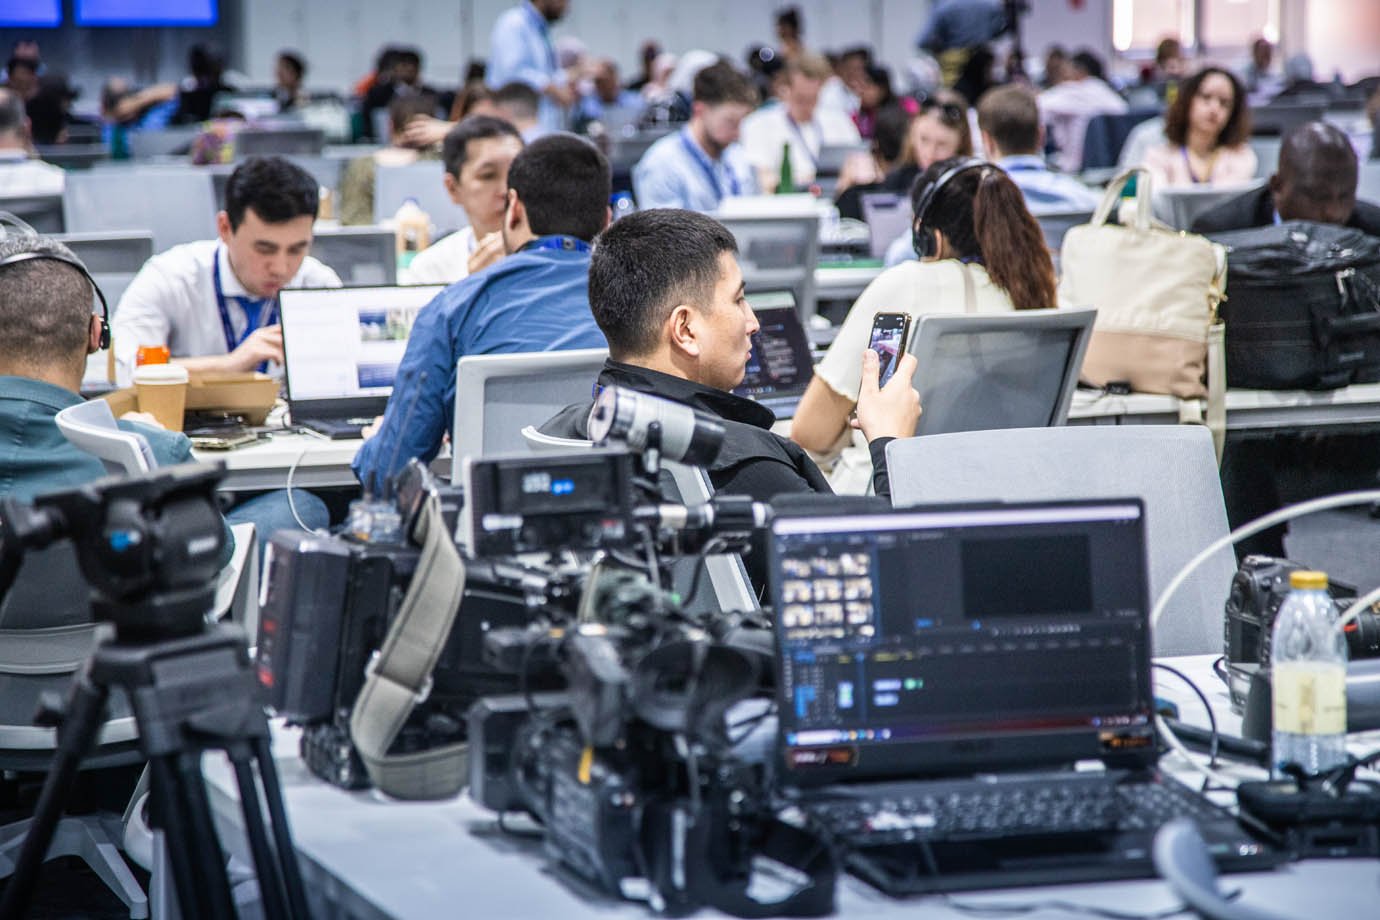 Jornalistas na sala de imprensa da COP28 - Dubai 

Foto: Leandro Fonseca - @leofonsa